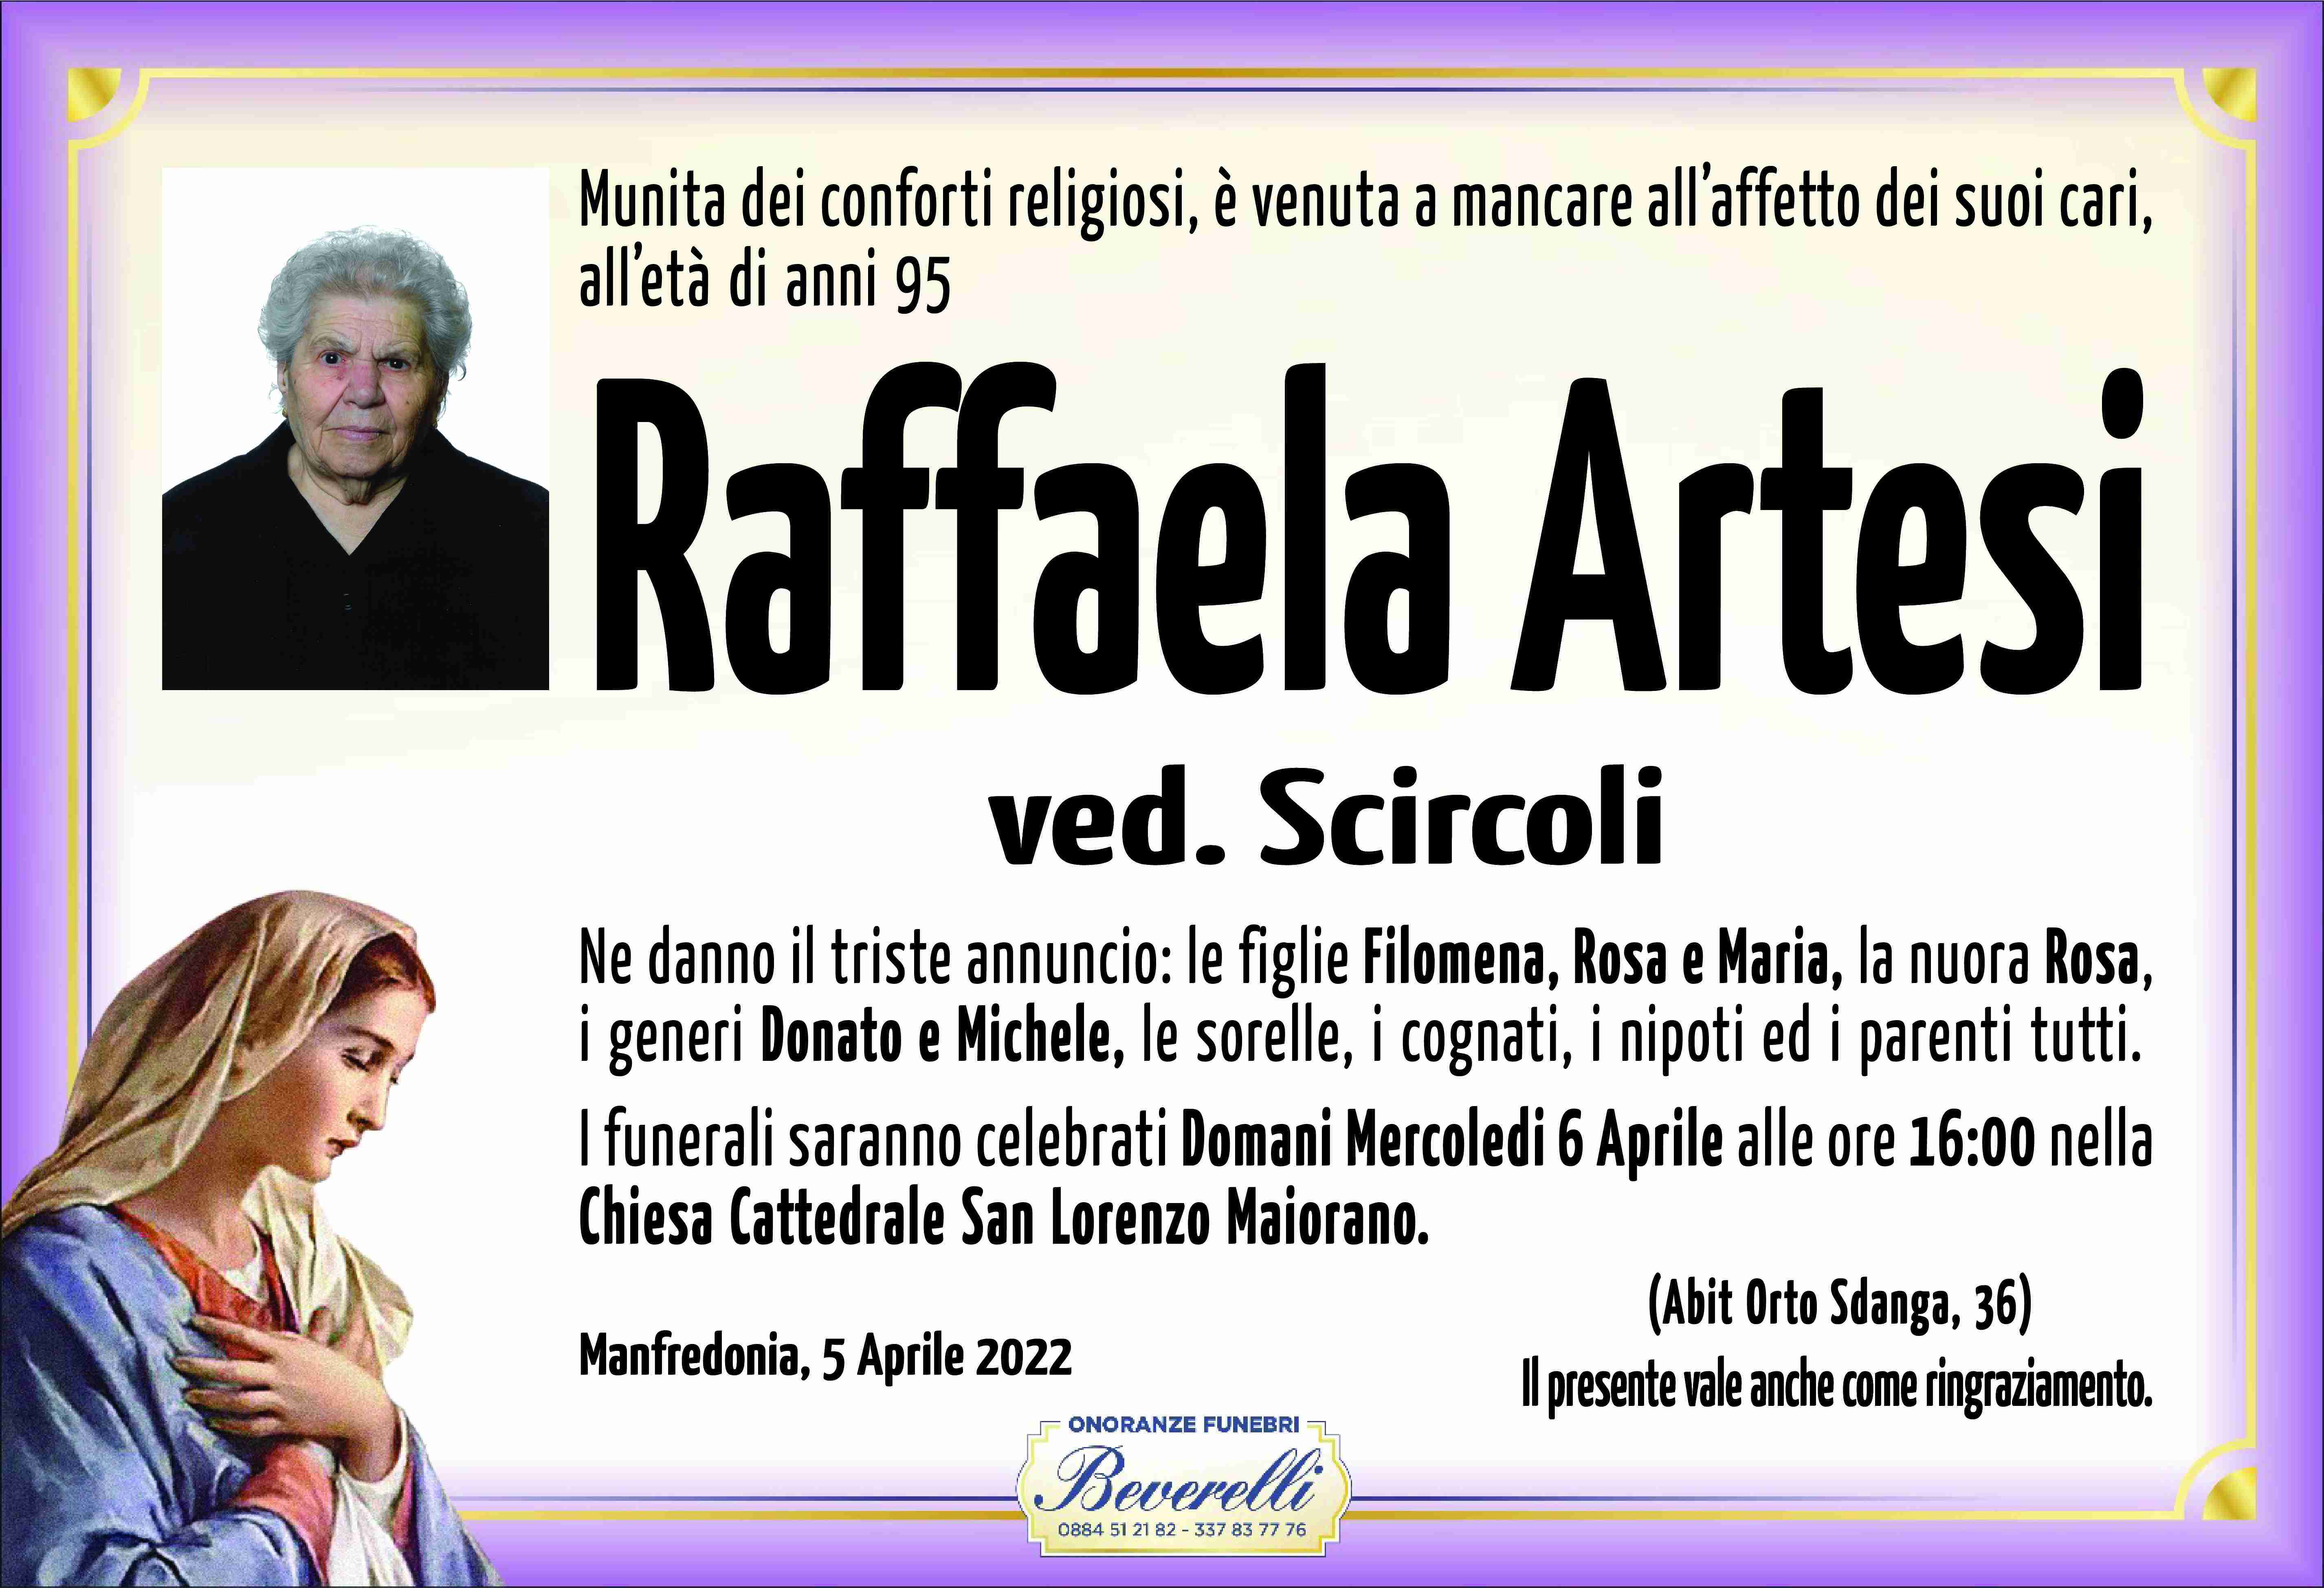 Raffaela Artesi